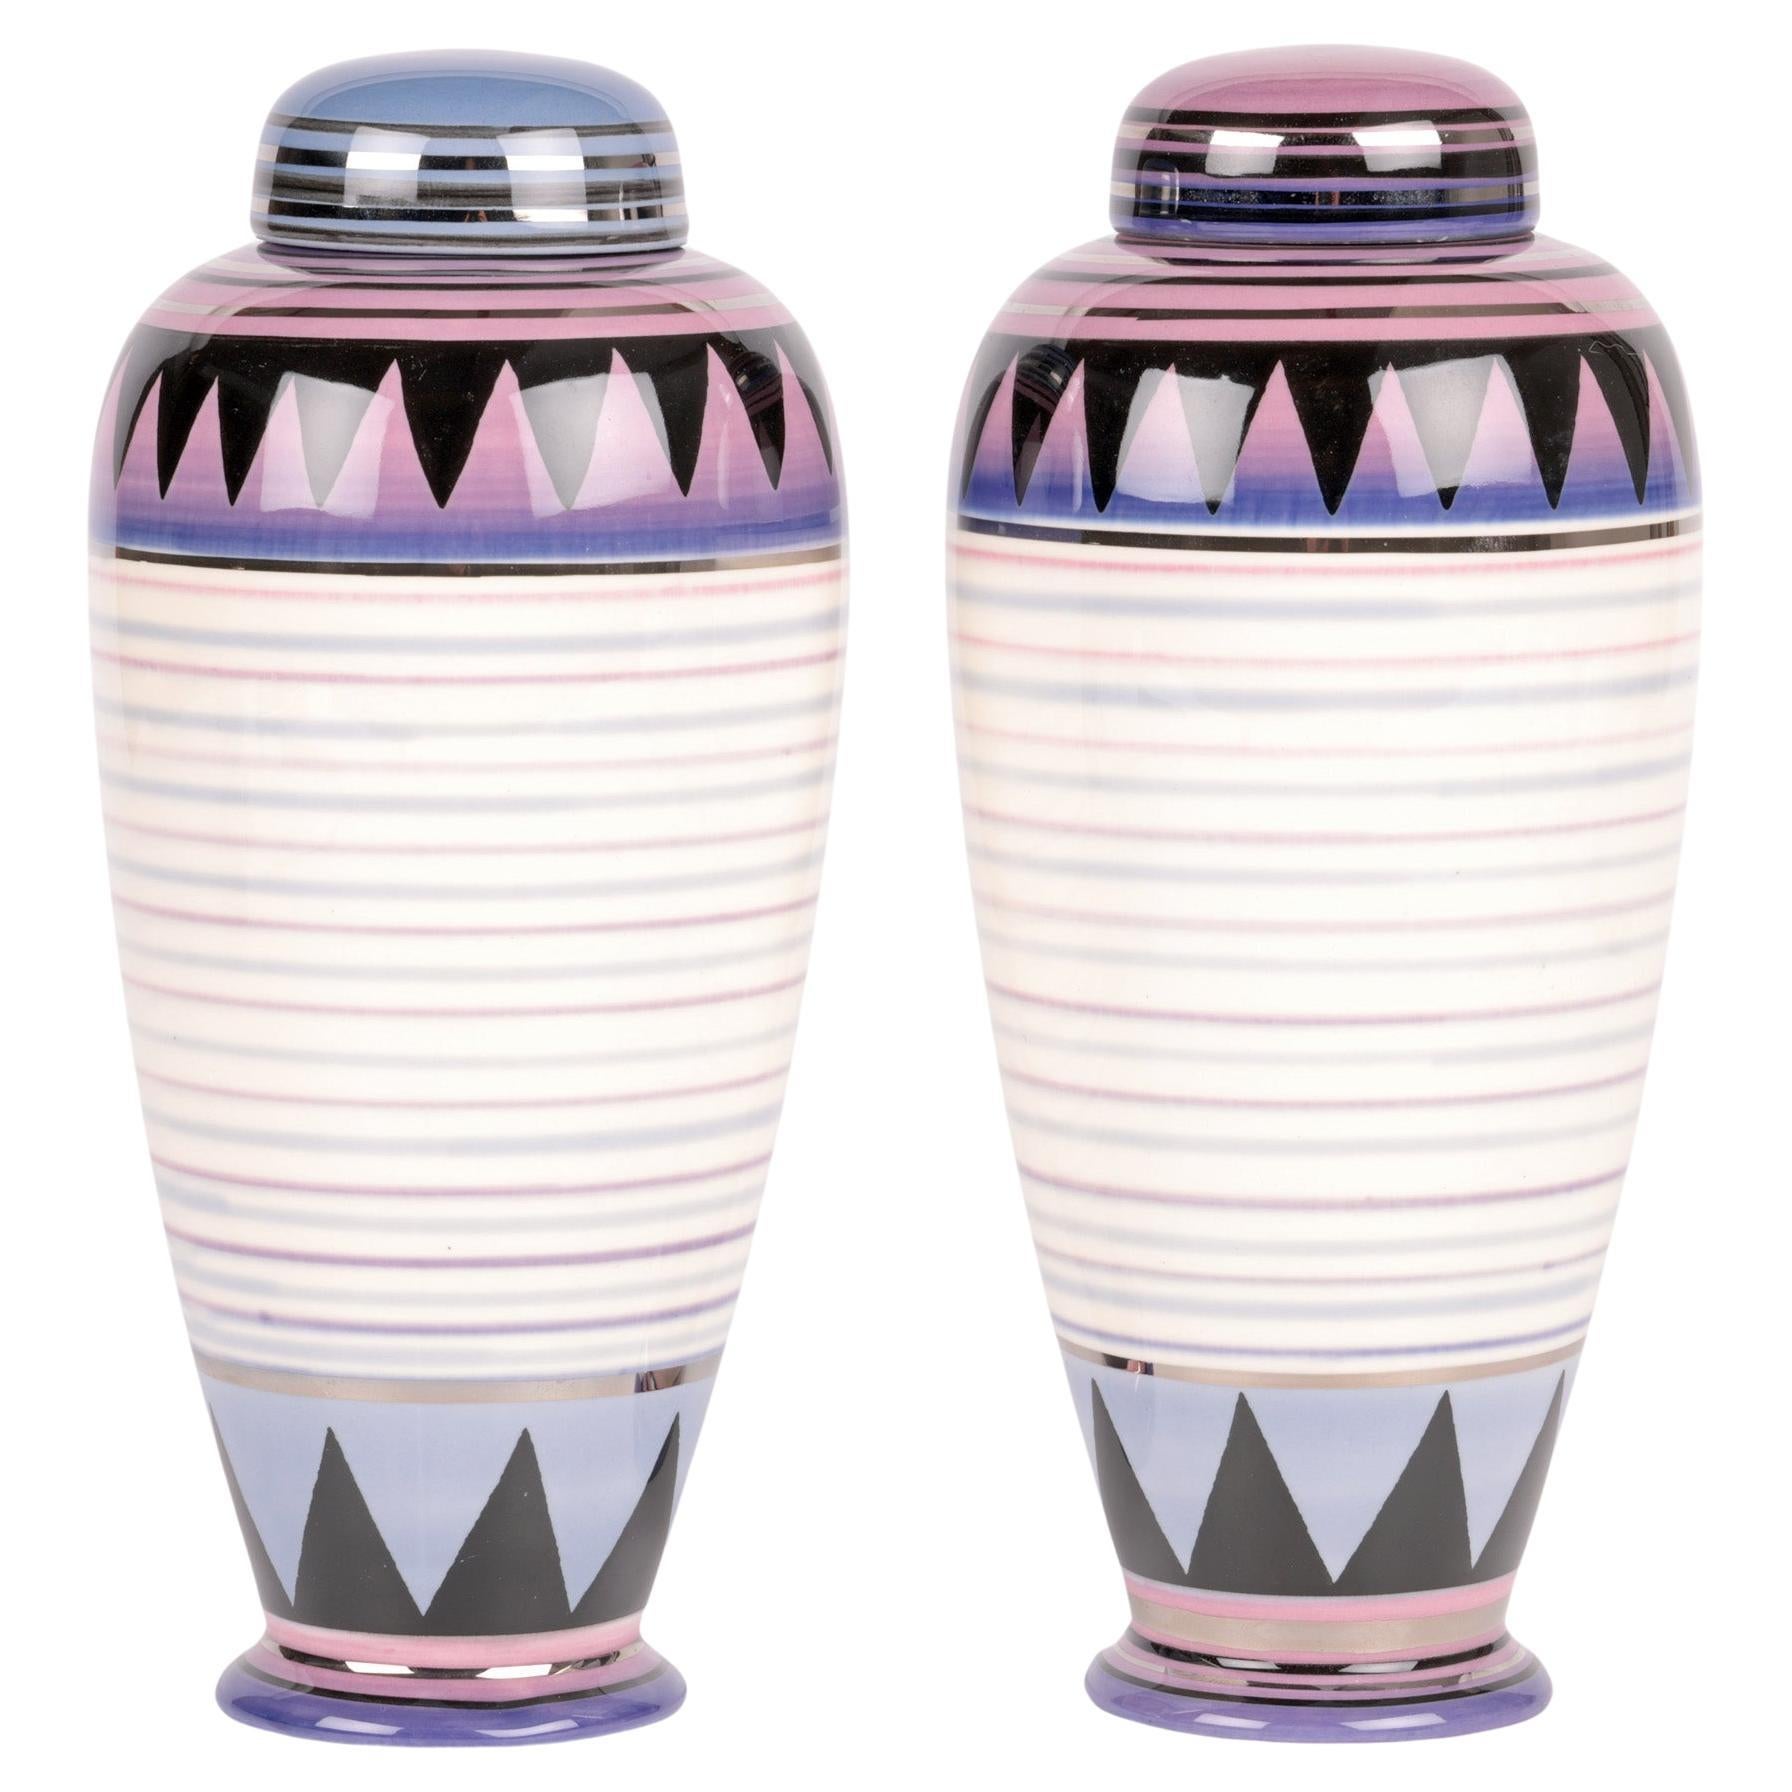 Moorland Pottery Paar keramische Vasen mit Deckeln   im Angebot